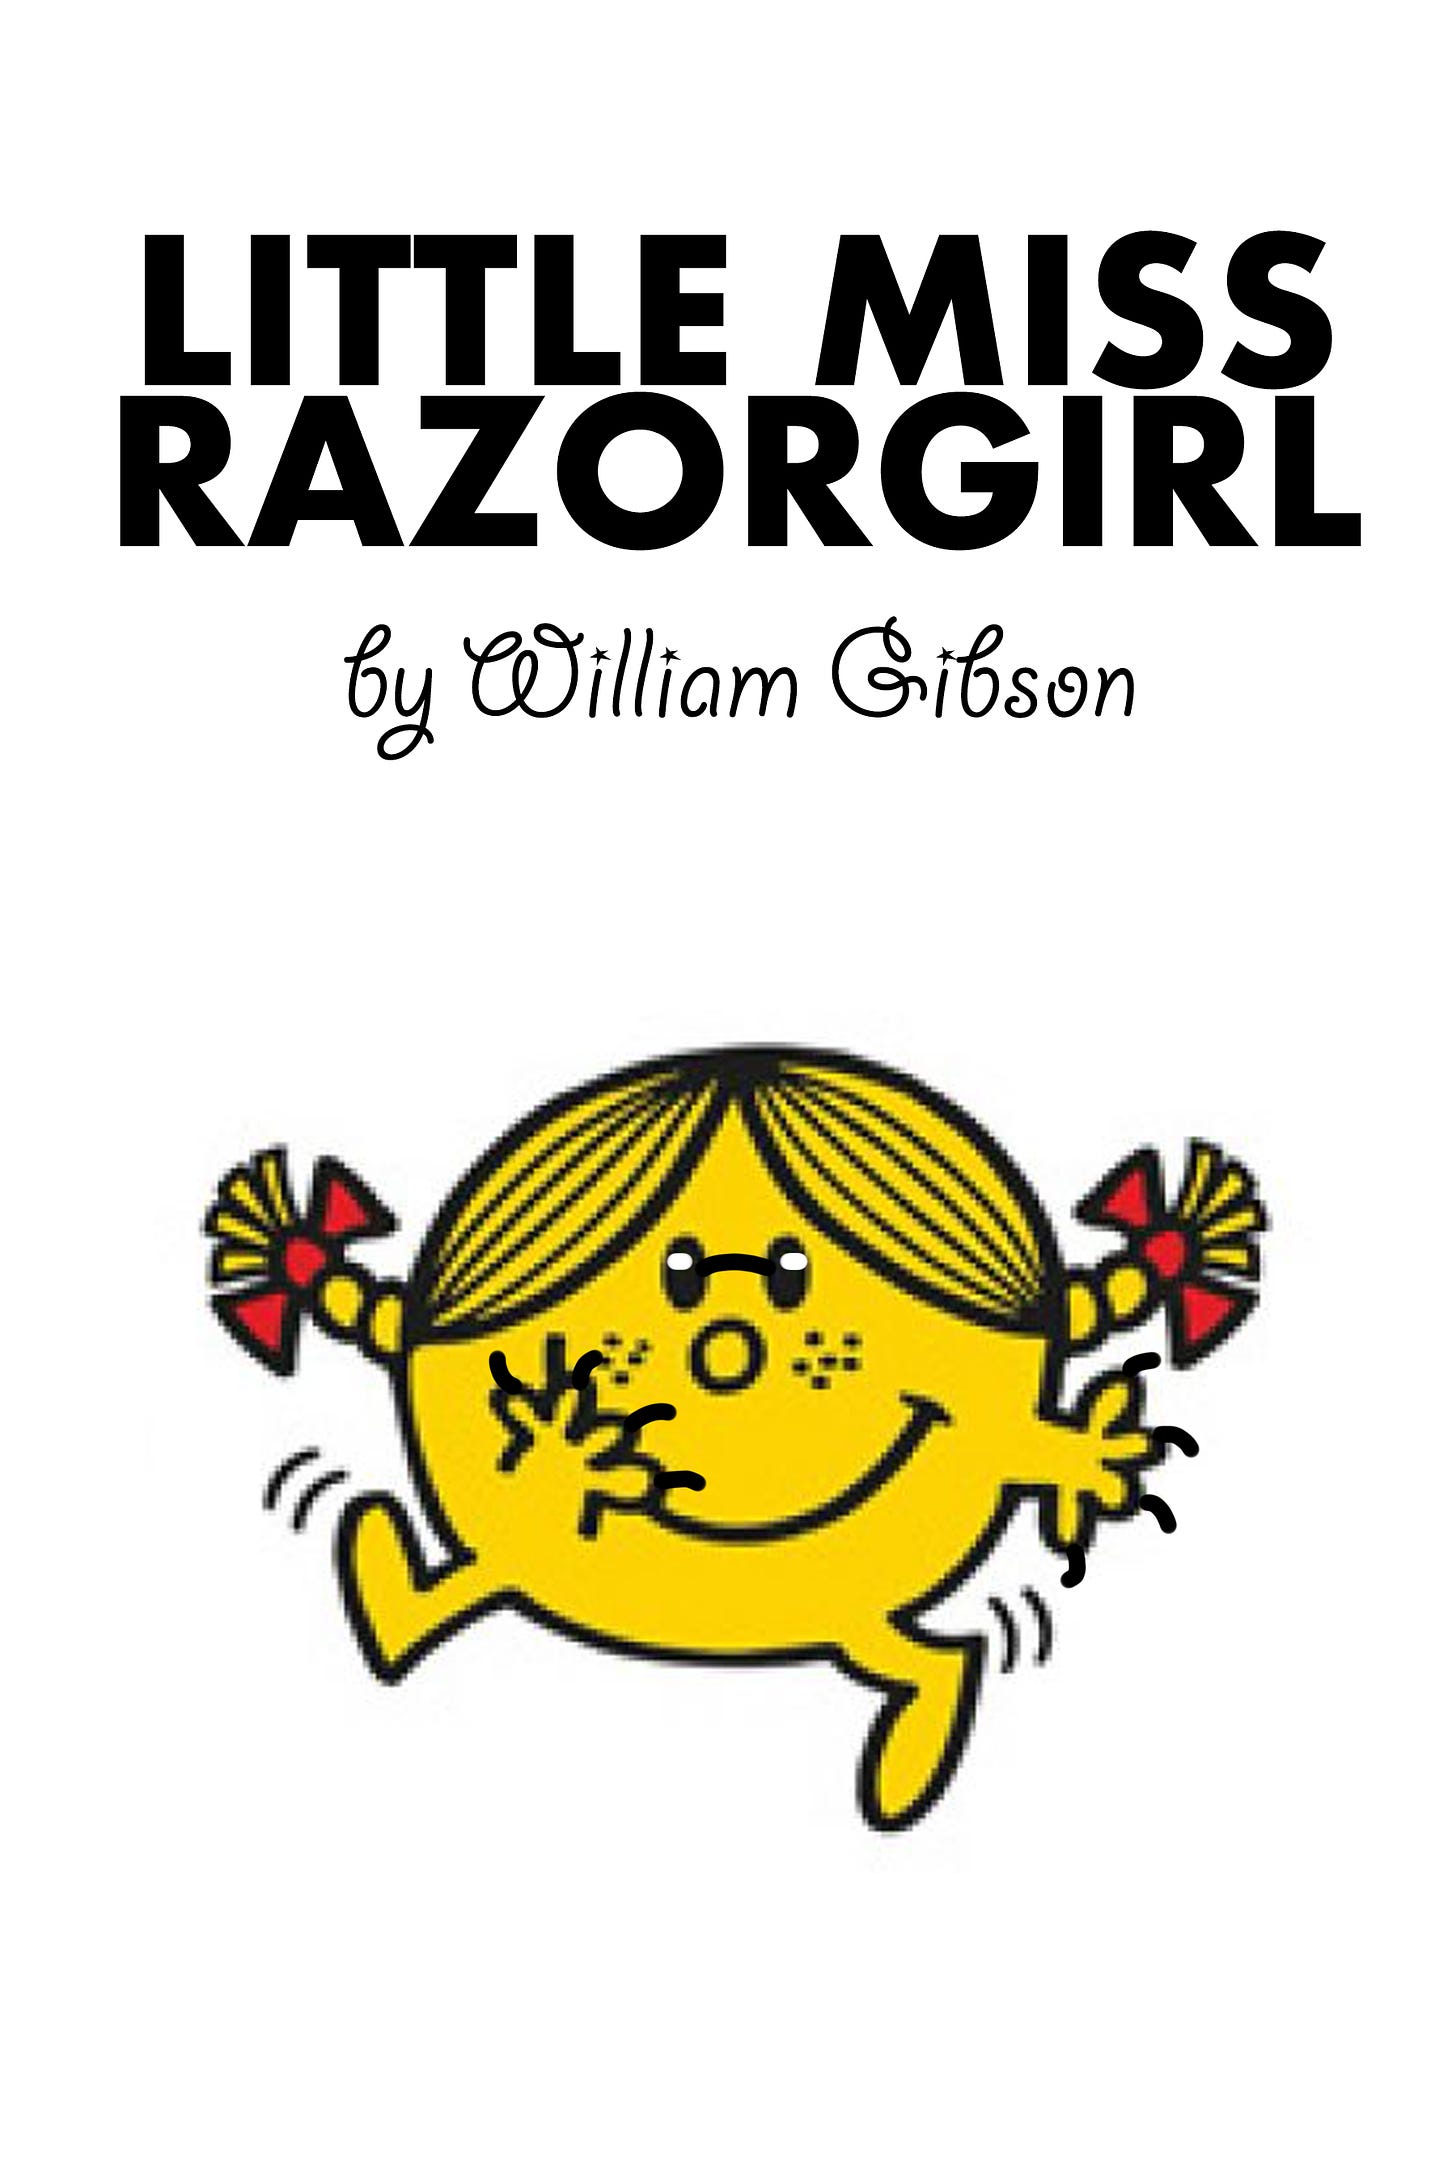 little miss razorgirl by william gibson, a parody of neuromancer as a mr. men book